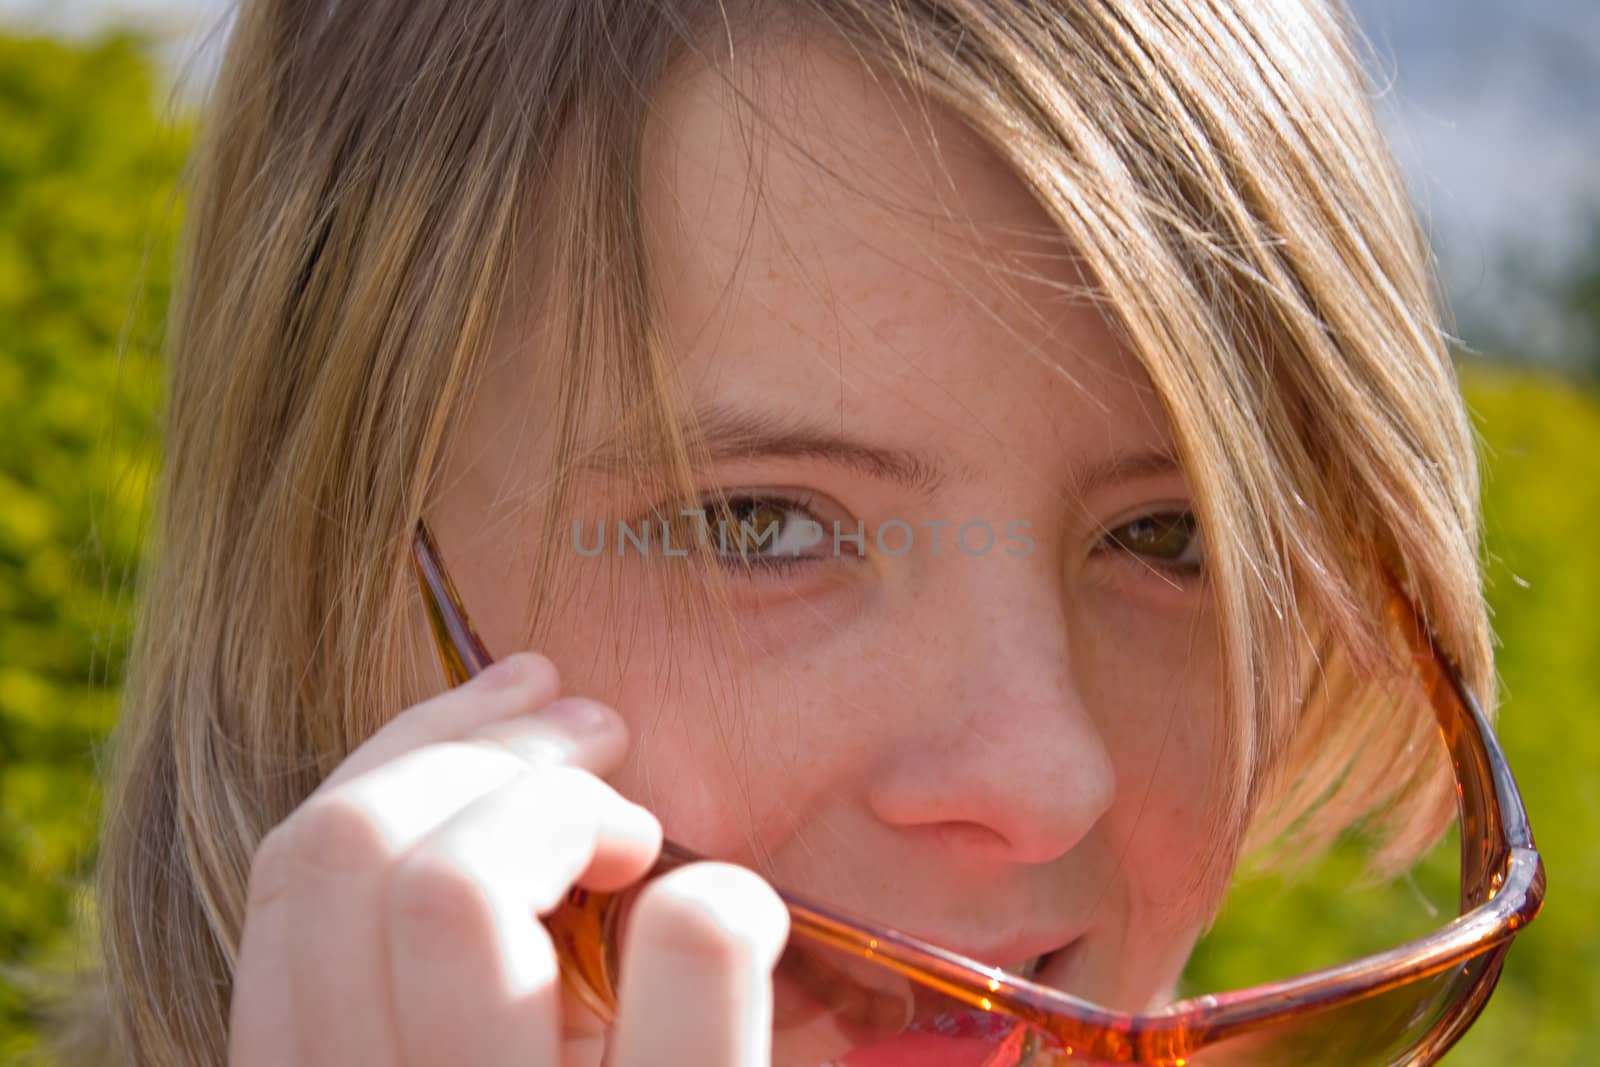 Teenage looks over her sunglasses. by groomee